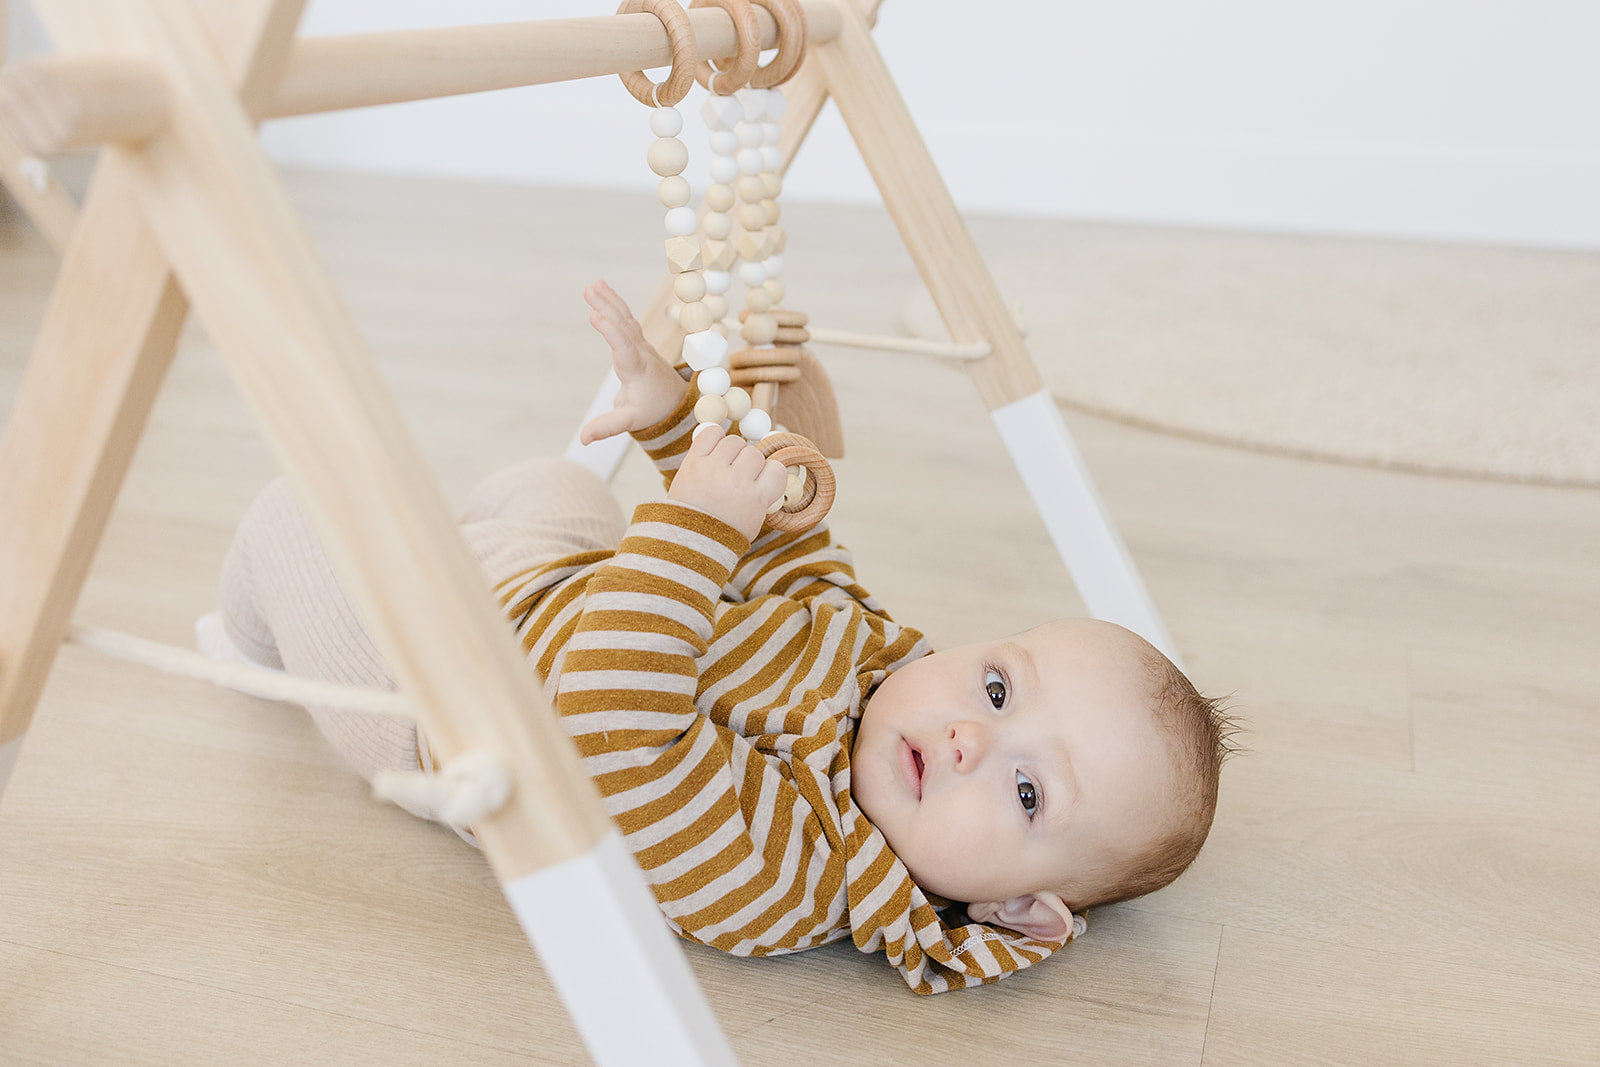 Wooden Baby Gym + White Toys  - Poppyseed Play